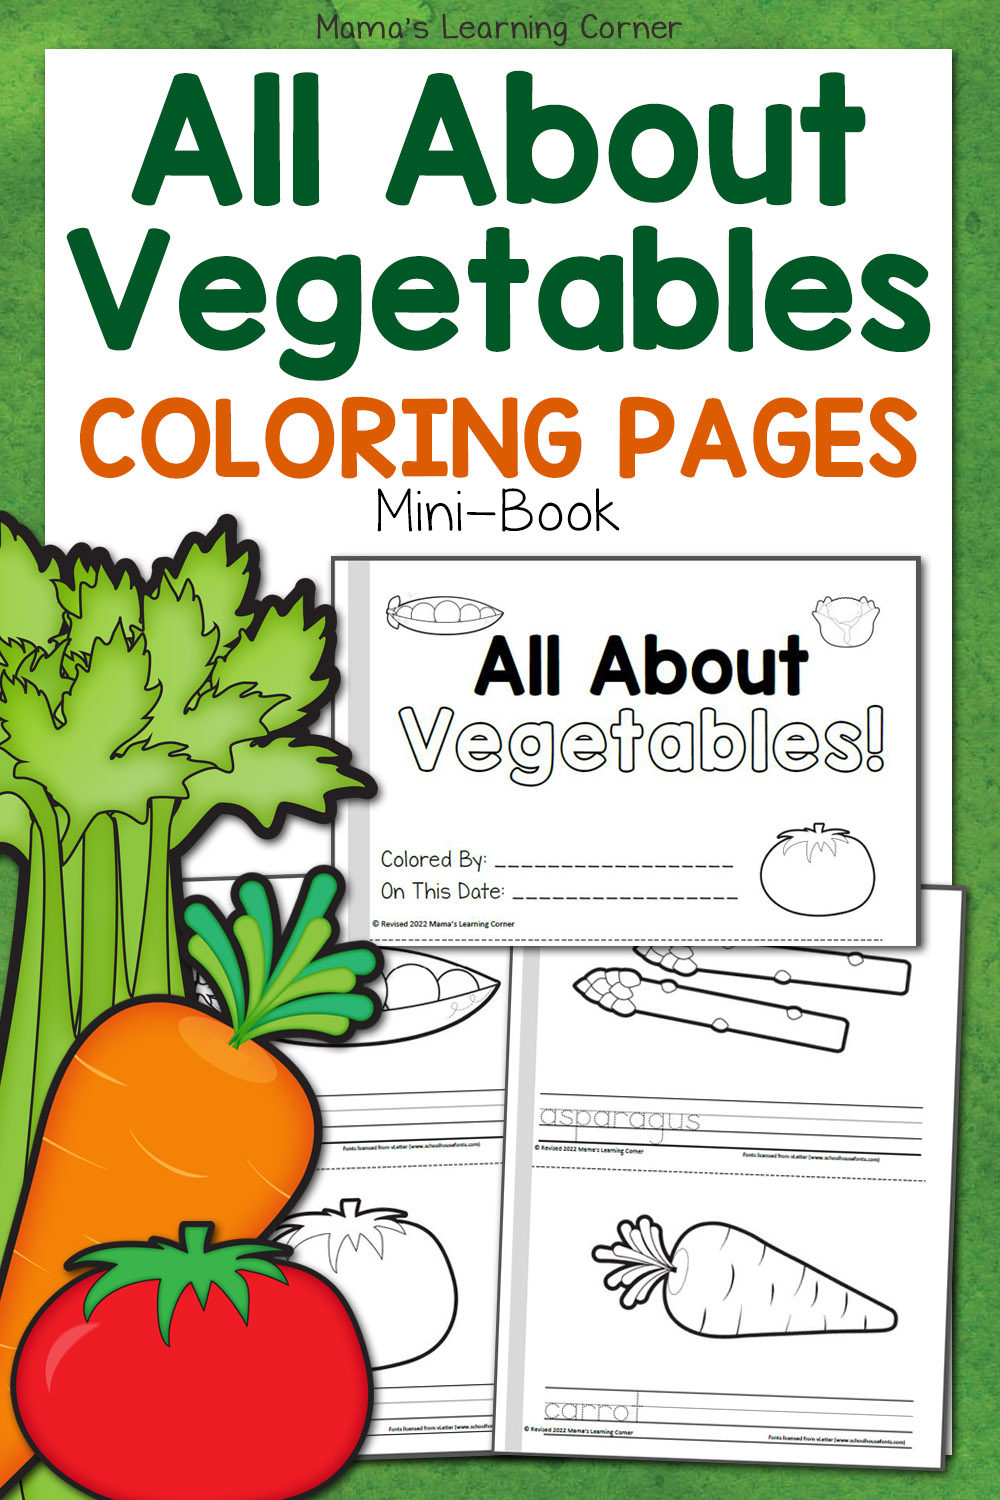 https://www.mamaslearningcorner.com/wp-content/uploads/2022/06/Vegetable-Coloring-Pages-Revised.jpg